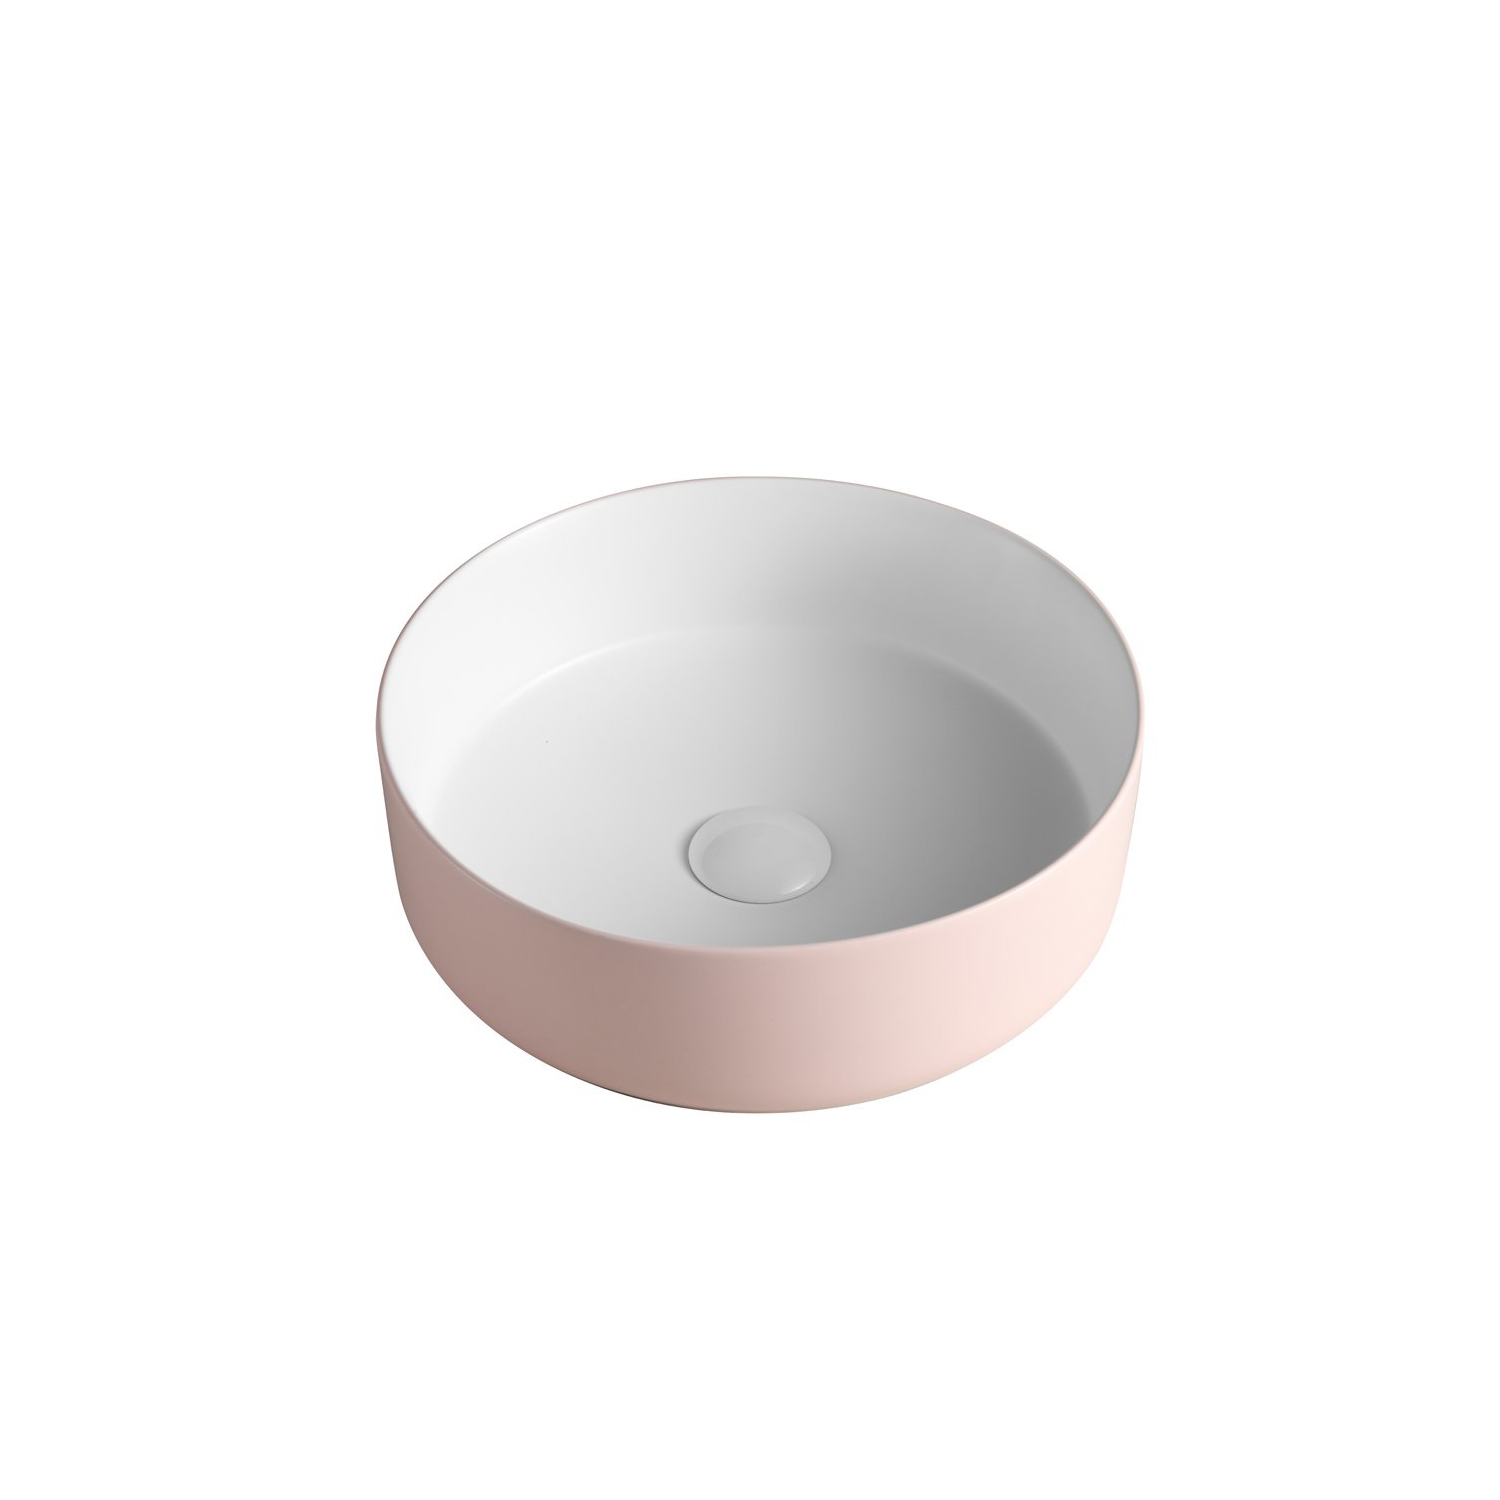 FRIDO-PI-WI Bathroom Sink Round Modern Pink & White Ceramic Vessel w/ Pop Up Drain, By Agua Canada